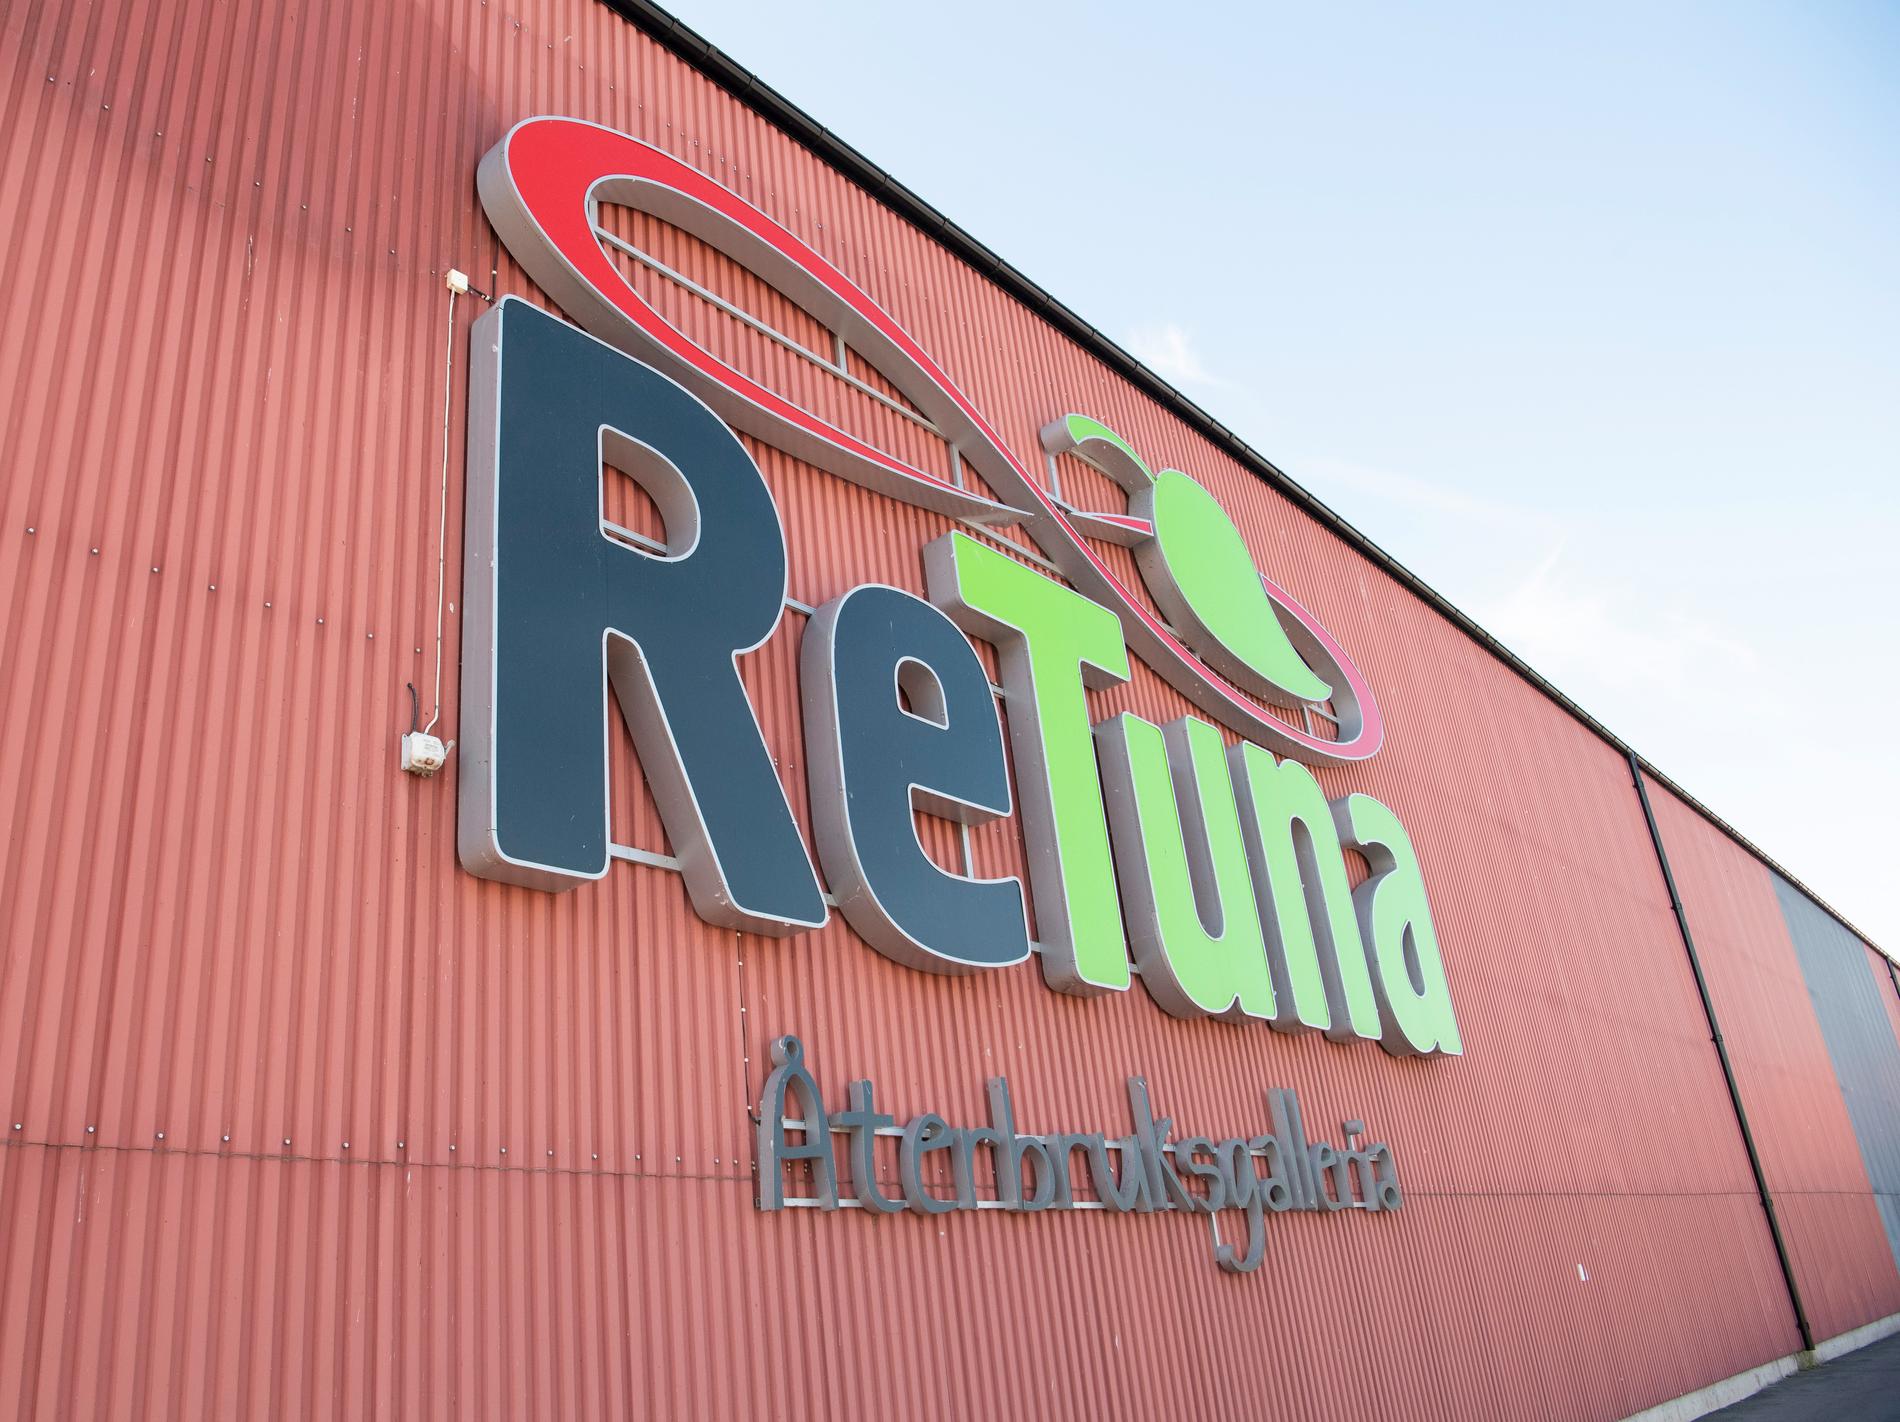 I återvinningsvaruhuset ReTuna i Eskilstuna ska Ikeas första second hand-butik öppna.